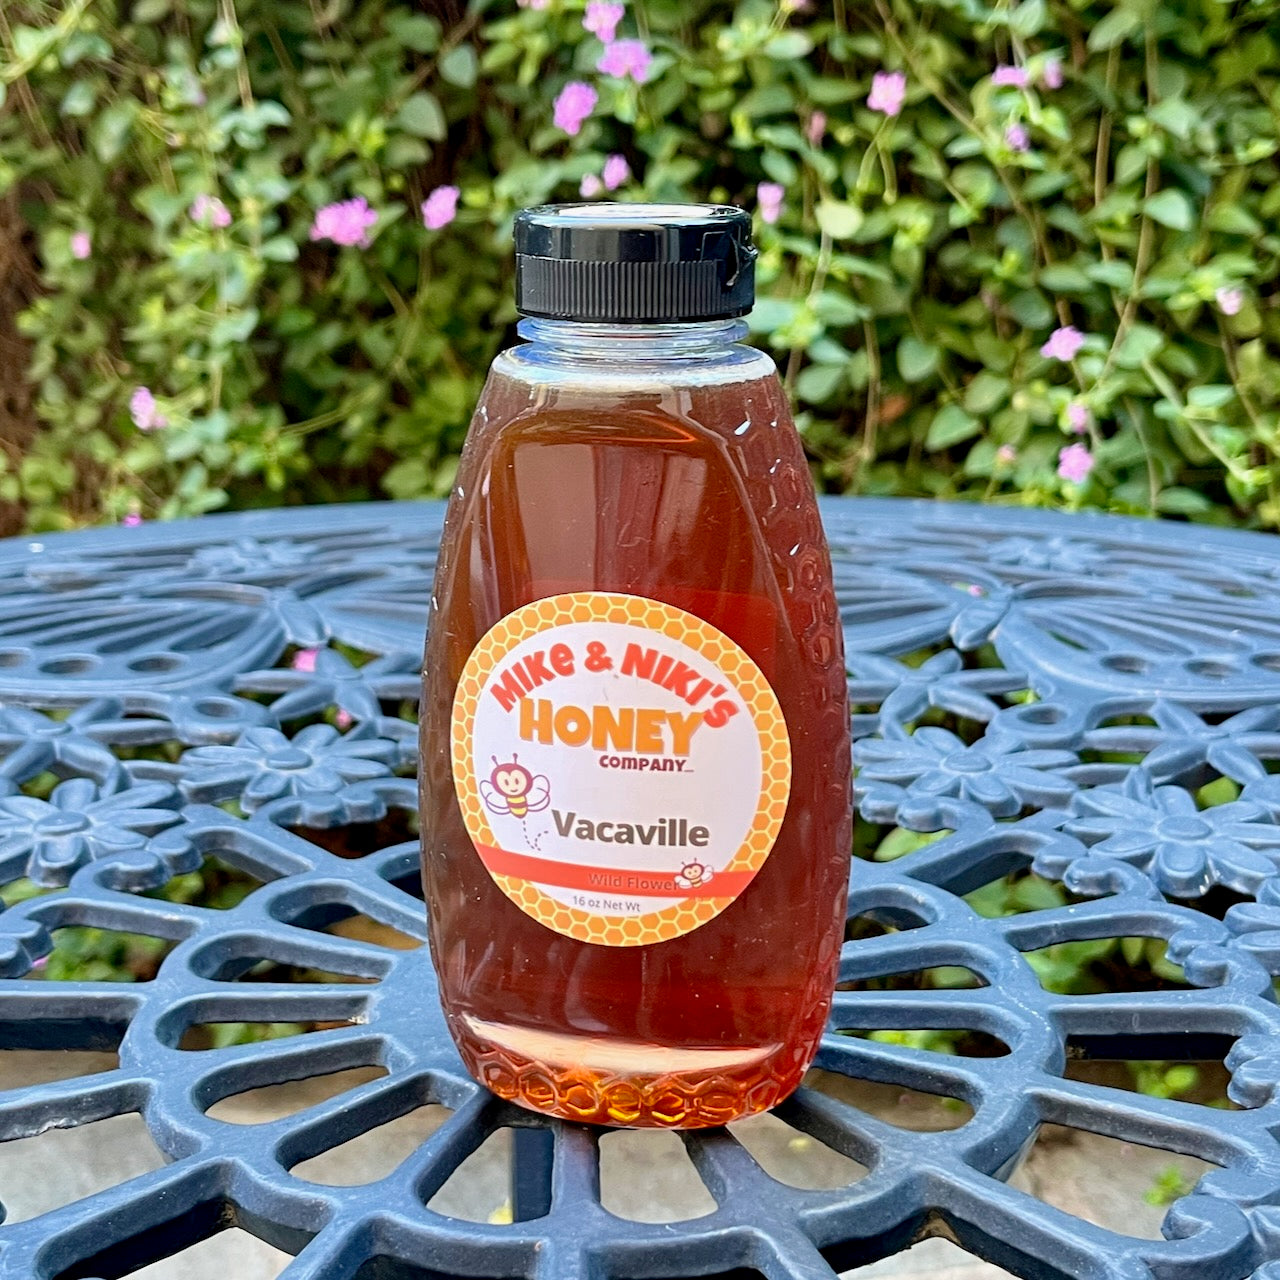 Vacaville Wildflower Honey